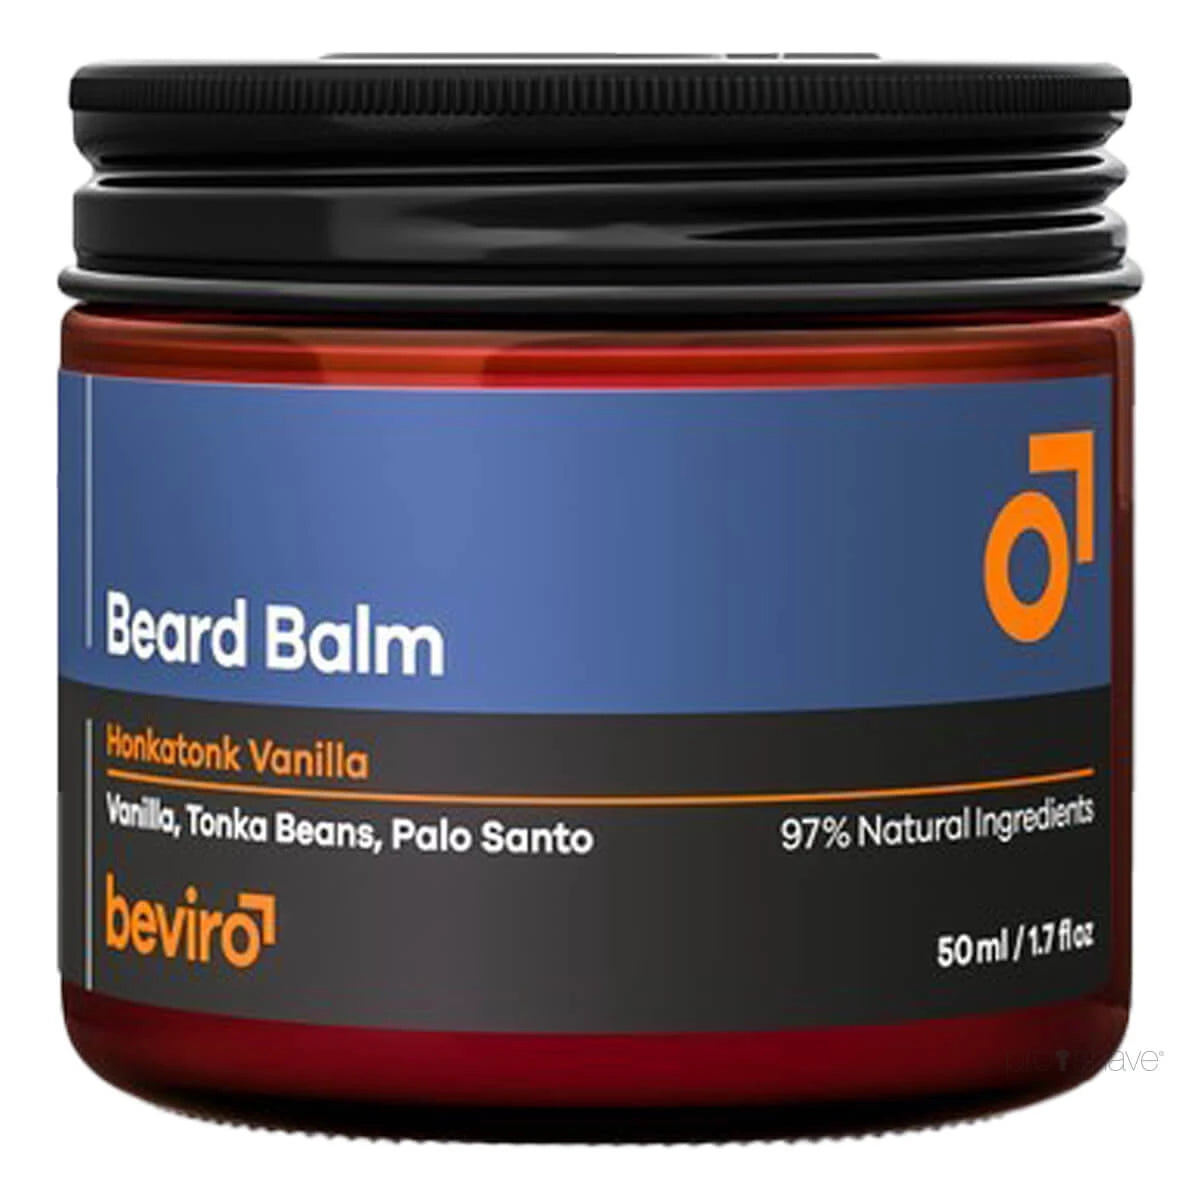 Beviro, Beard Balm- Honkatonk Vanilla